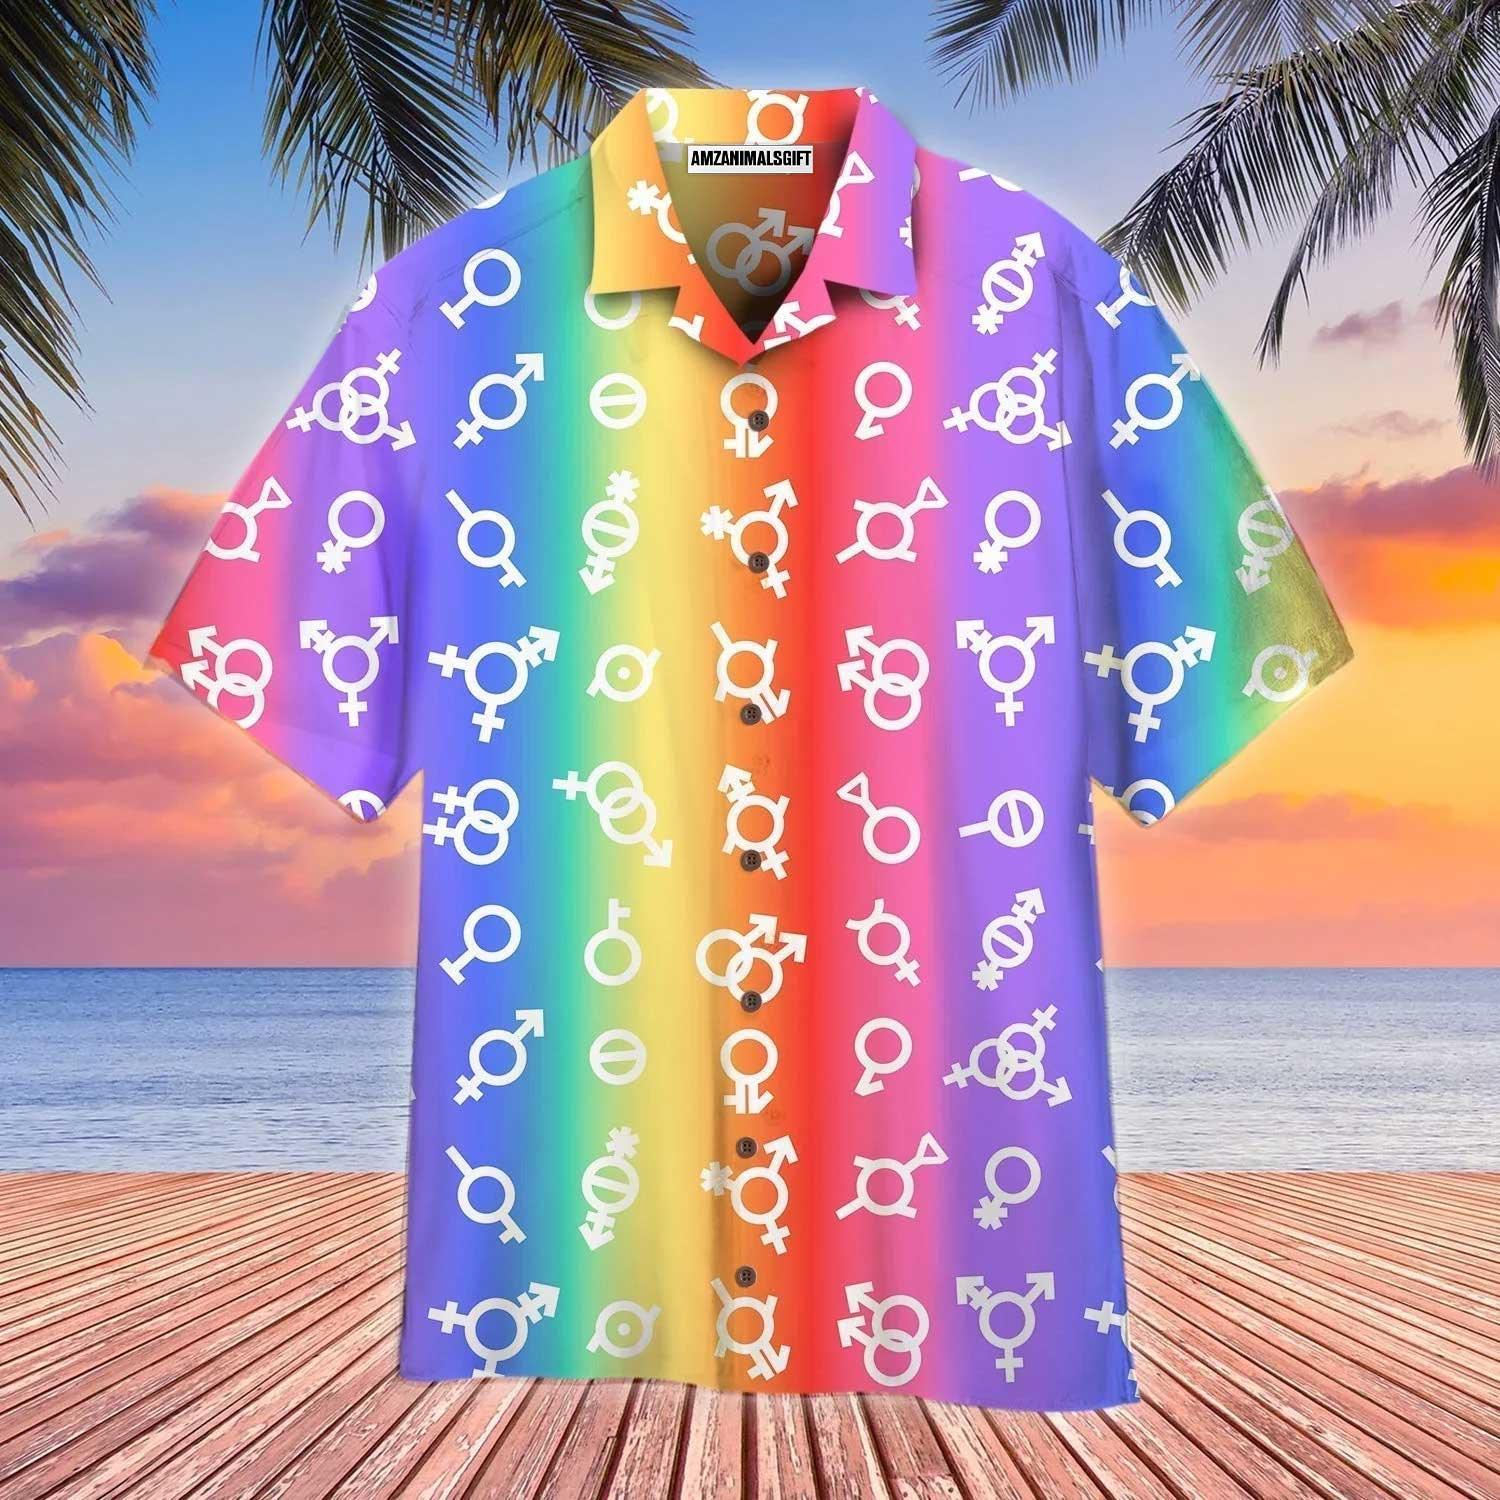 LGBT Aloha Hawaiian Shirts For Summer, Pride Flag LGBT Gender Aloha Hawaiian Shirts For Men Women, Best Gift For Friend, Family, Team - Amzanimalsgift